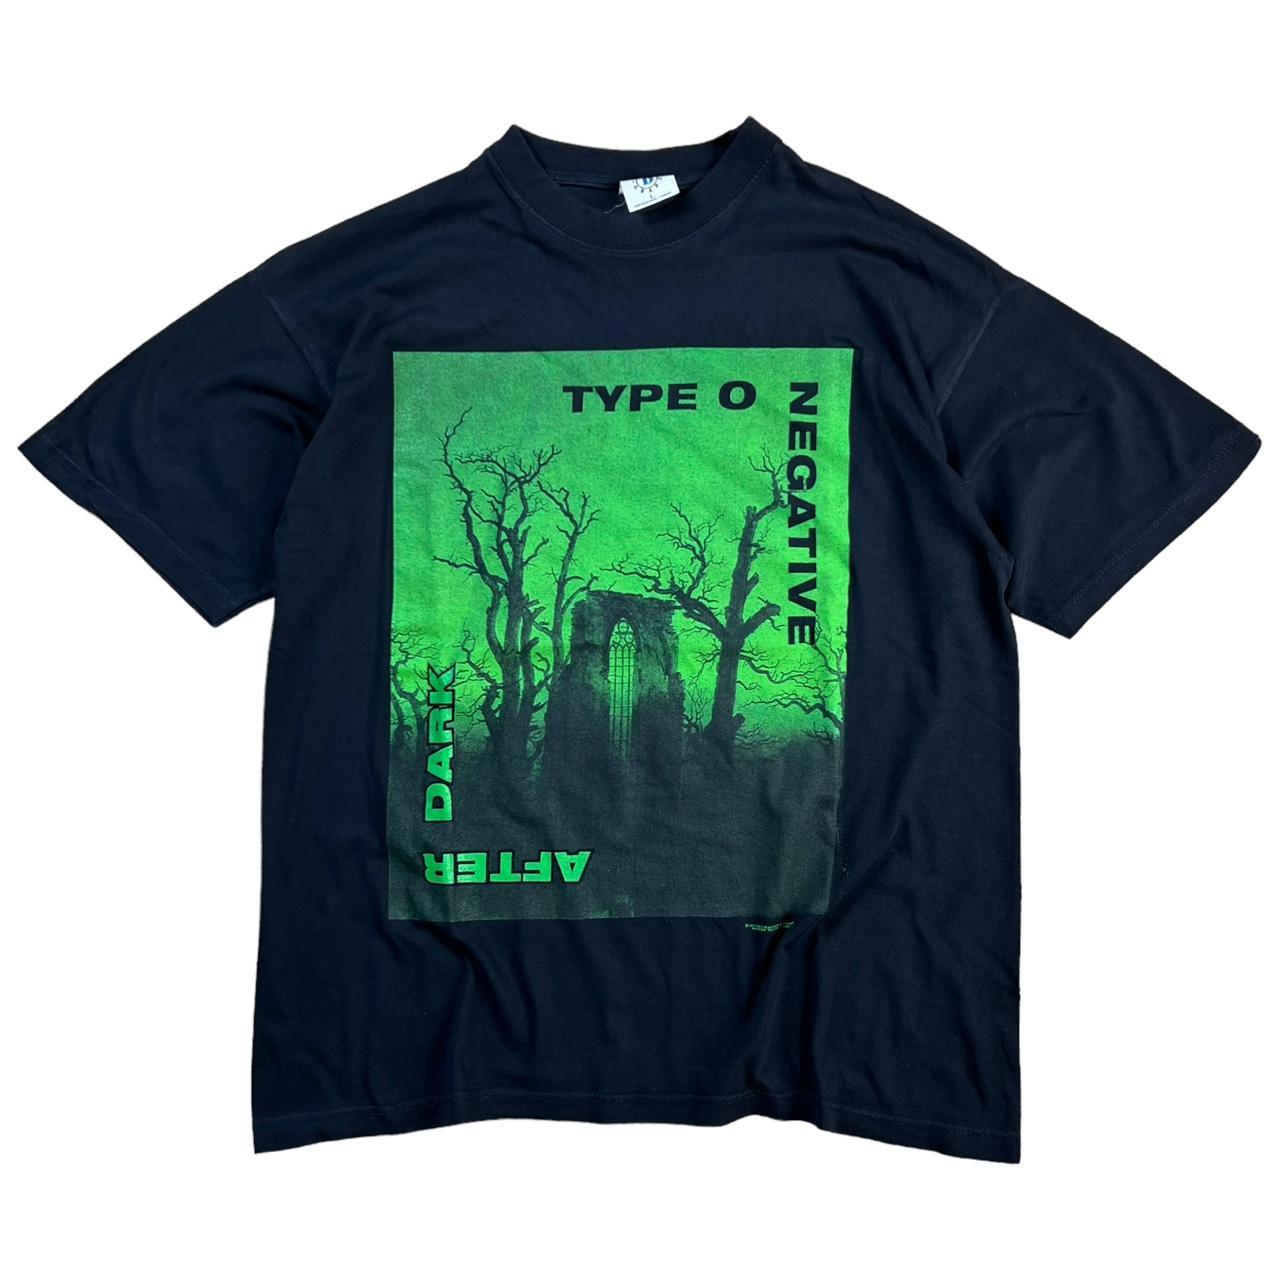 Type O T-Shirt, Type o negative shirt, Grunge Clothing, Goth shirt